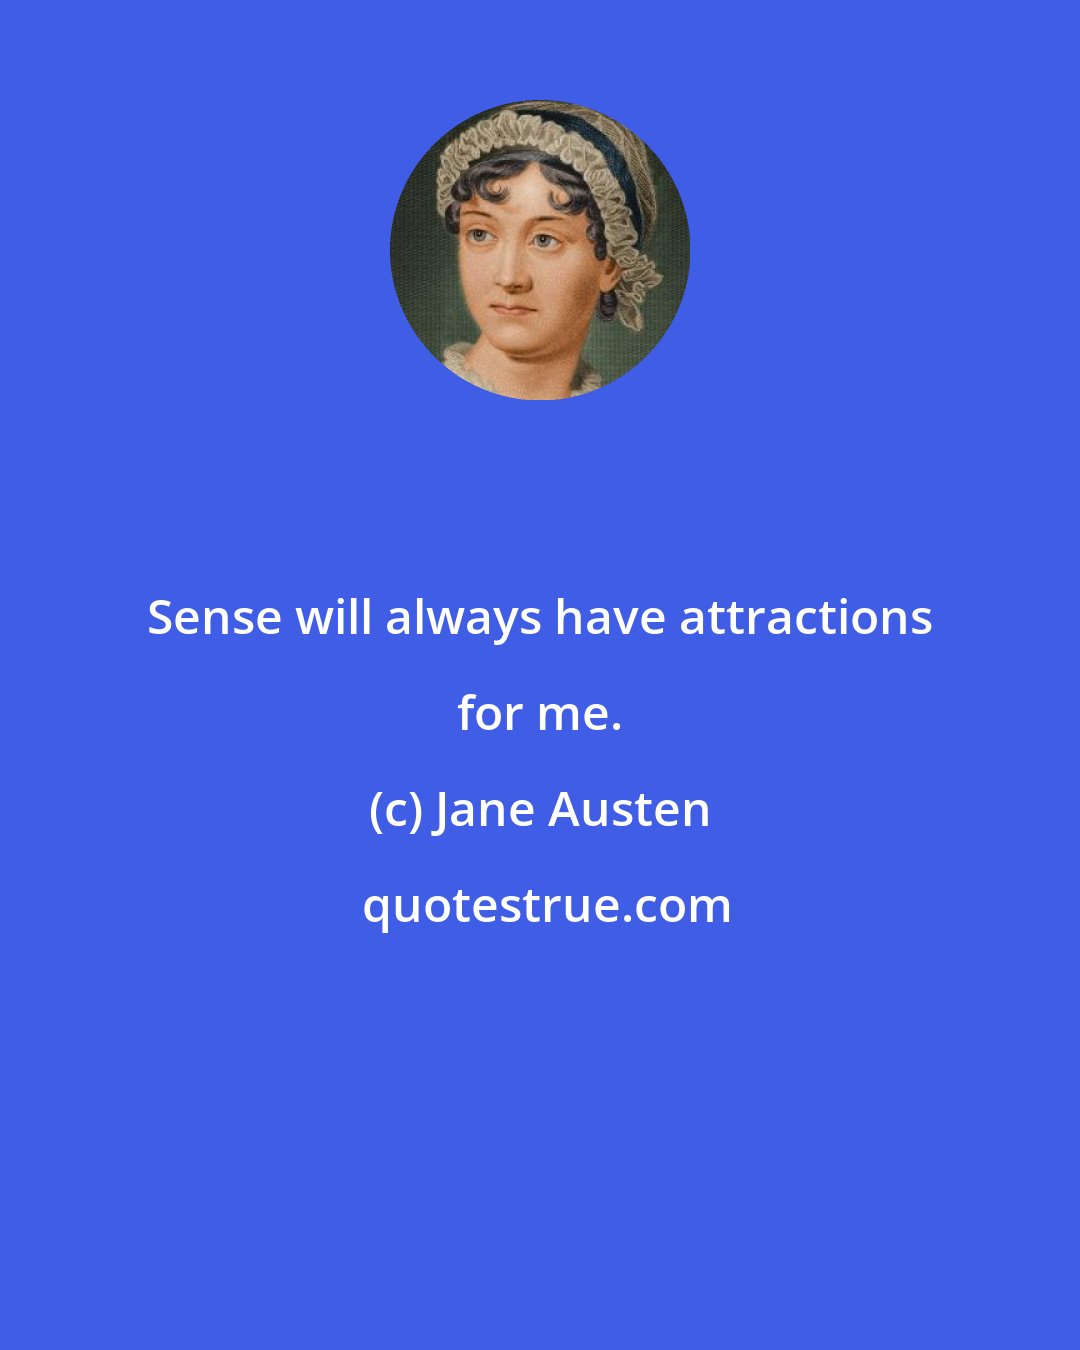 Jane Austen: Sense will always have attractions for me.